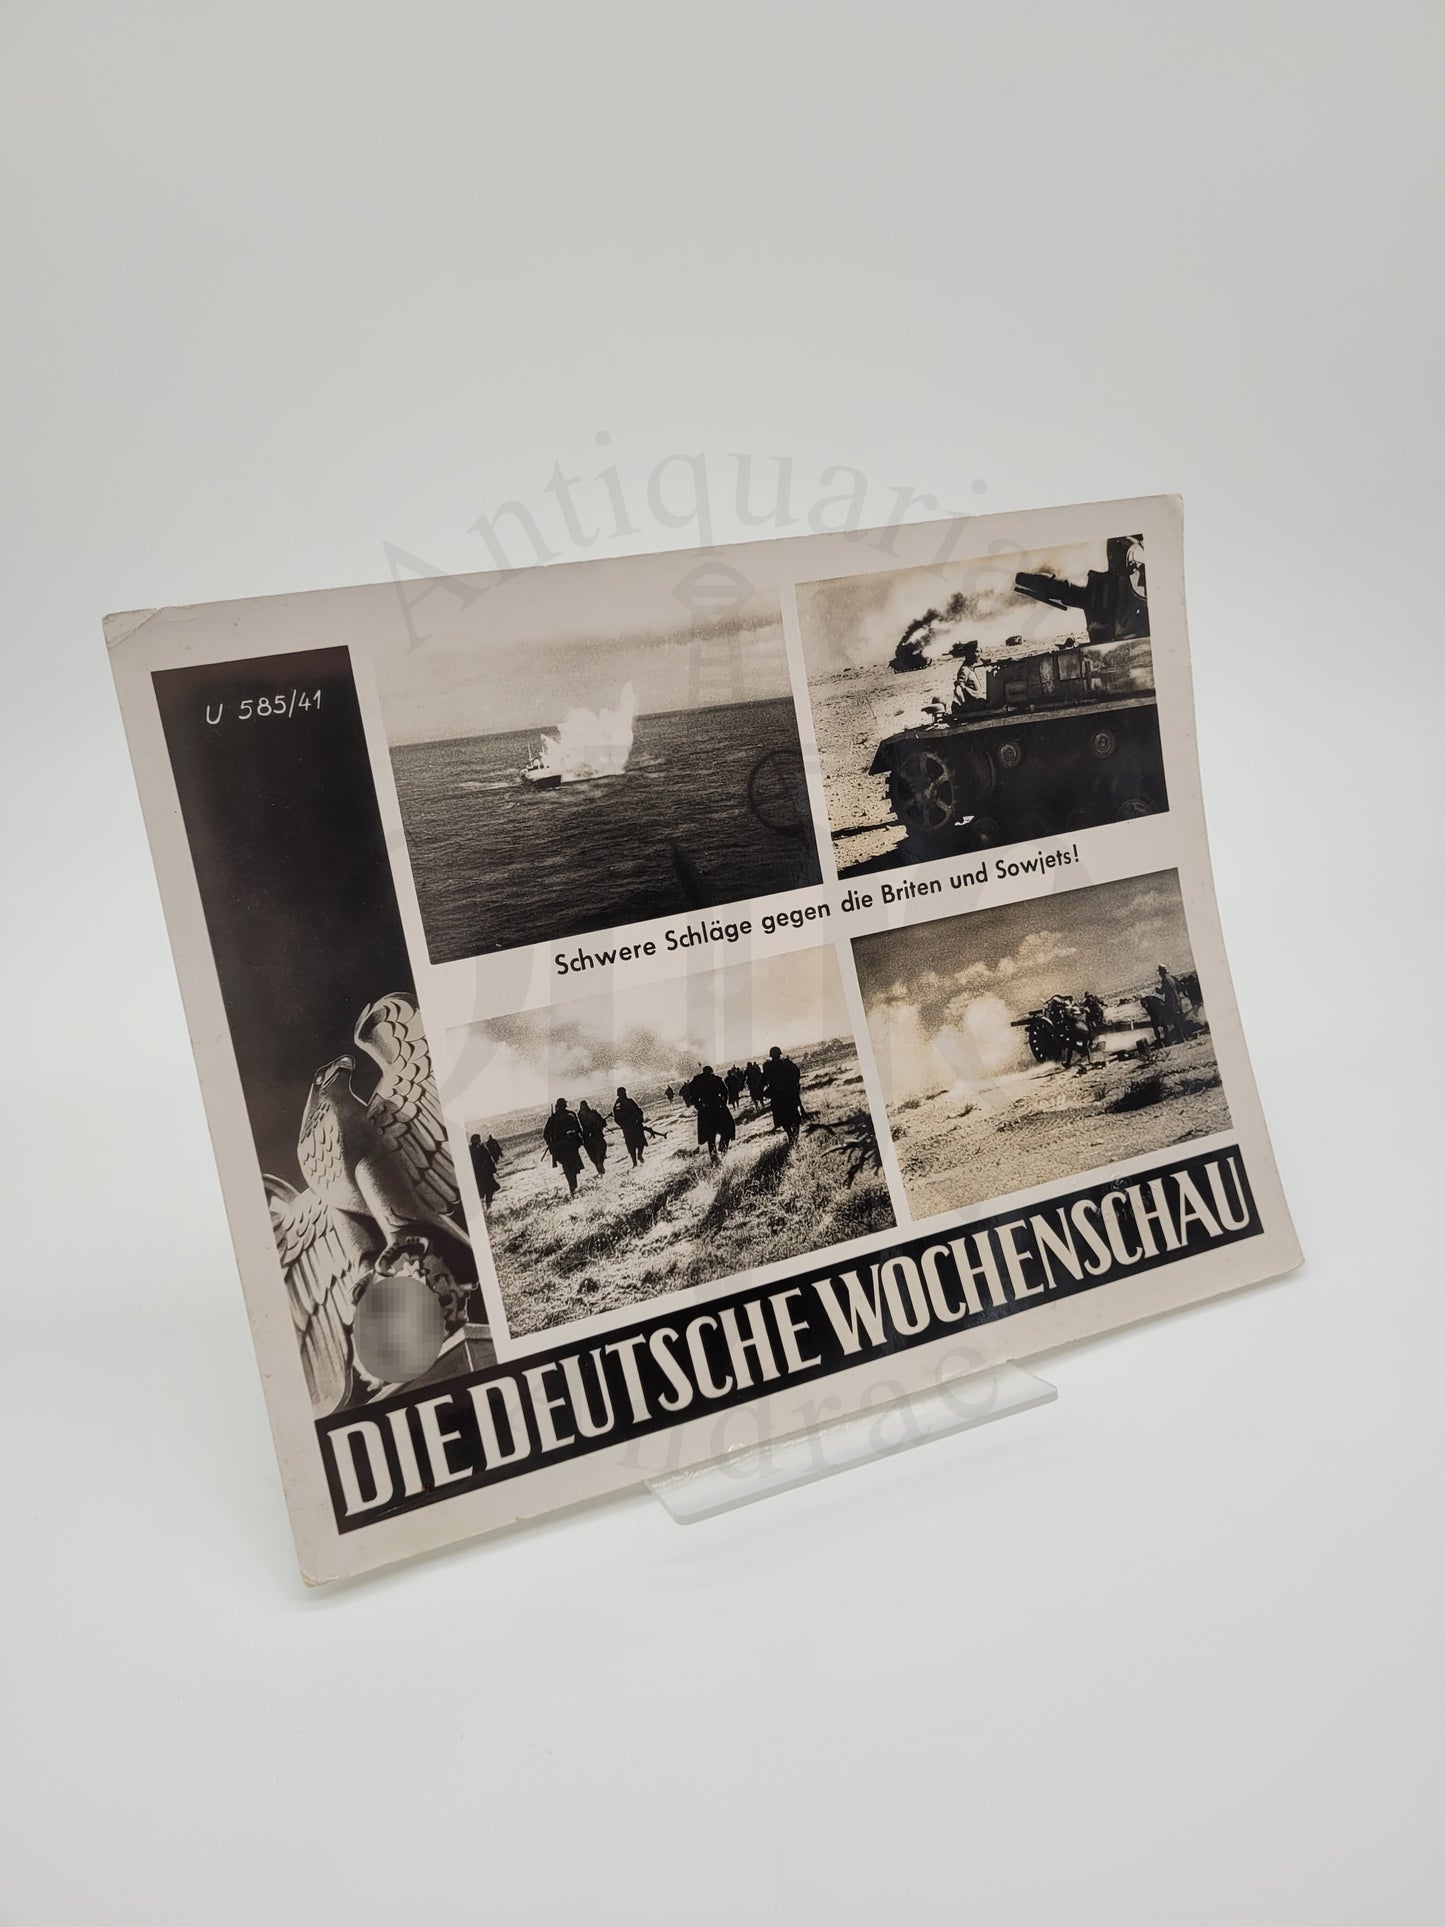 Deutsche Wochenschau Propaganda-Folio